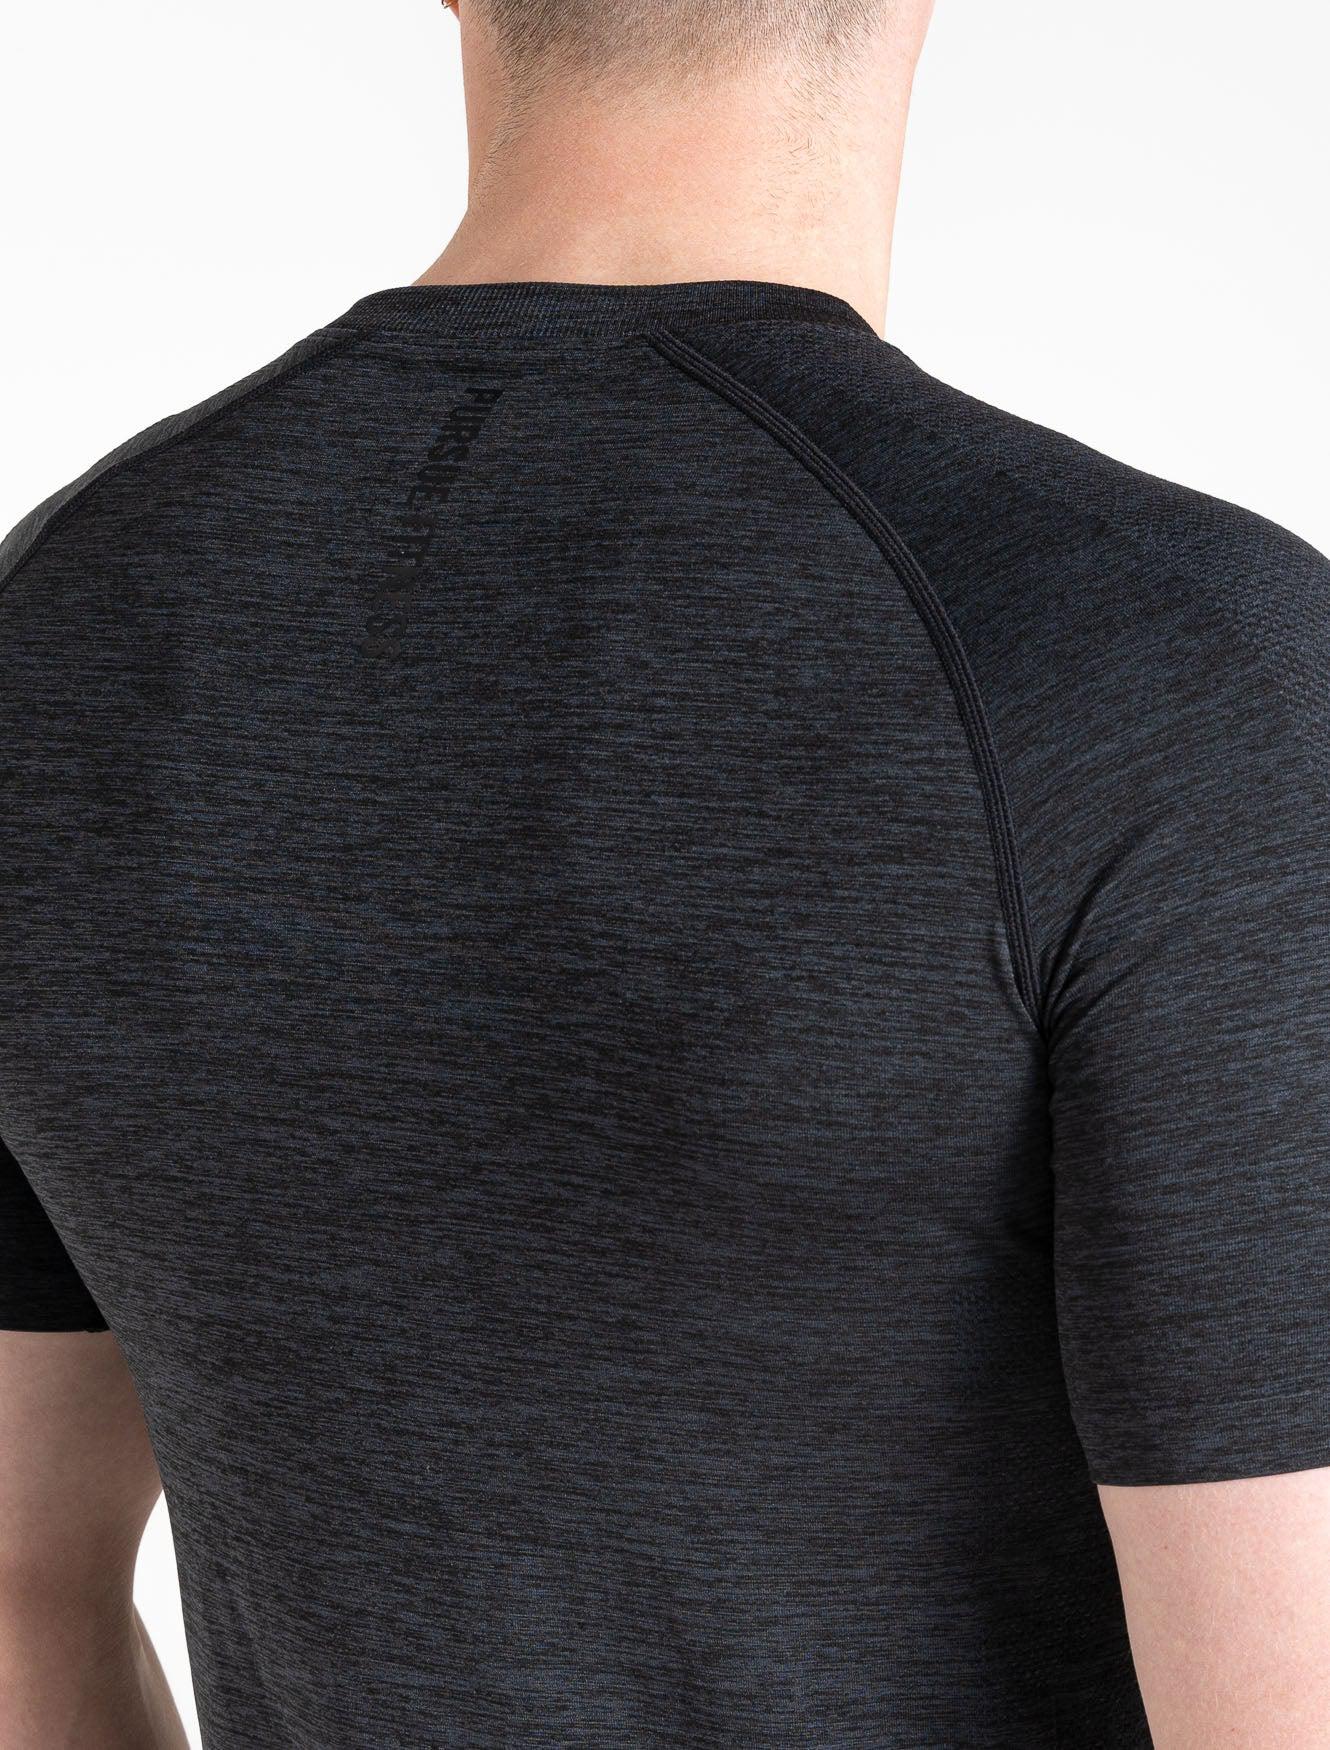 Intensity Seamless T-shirt / Black Marl Pursue Fitness 4